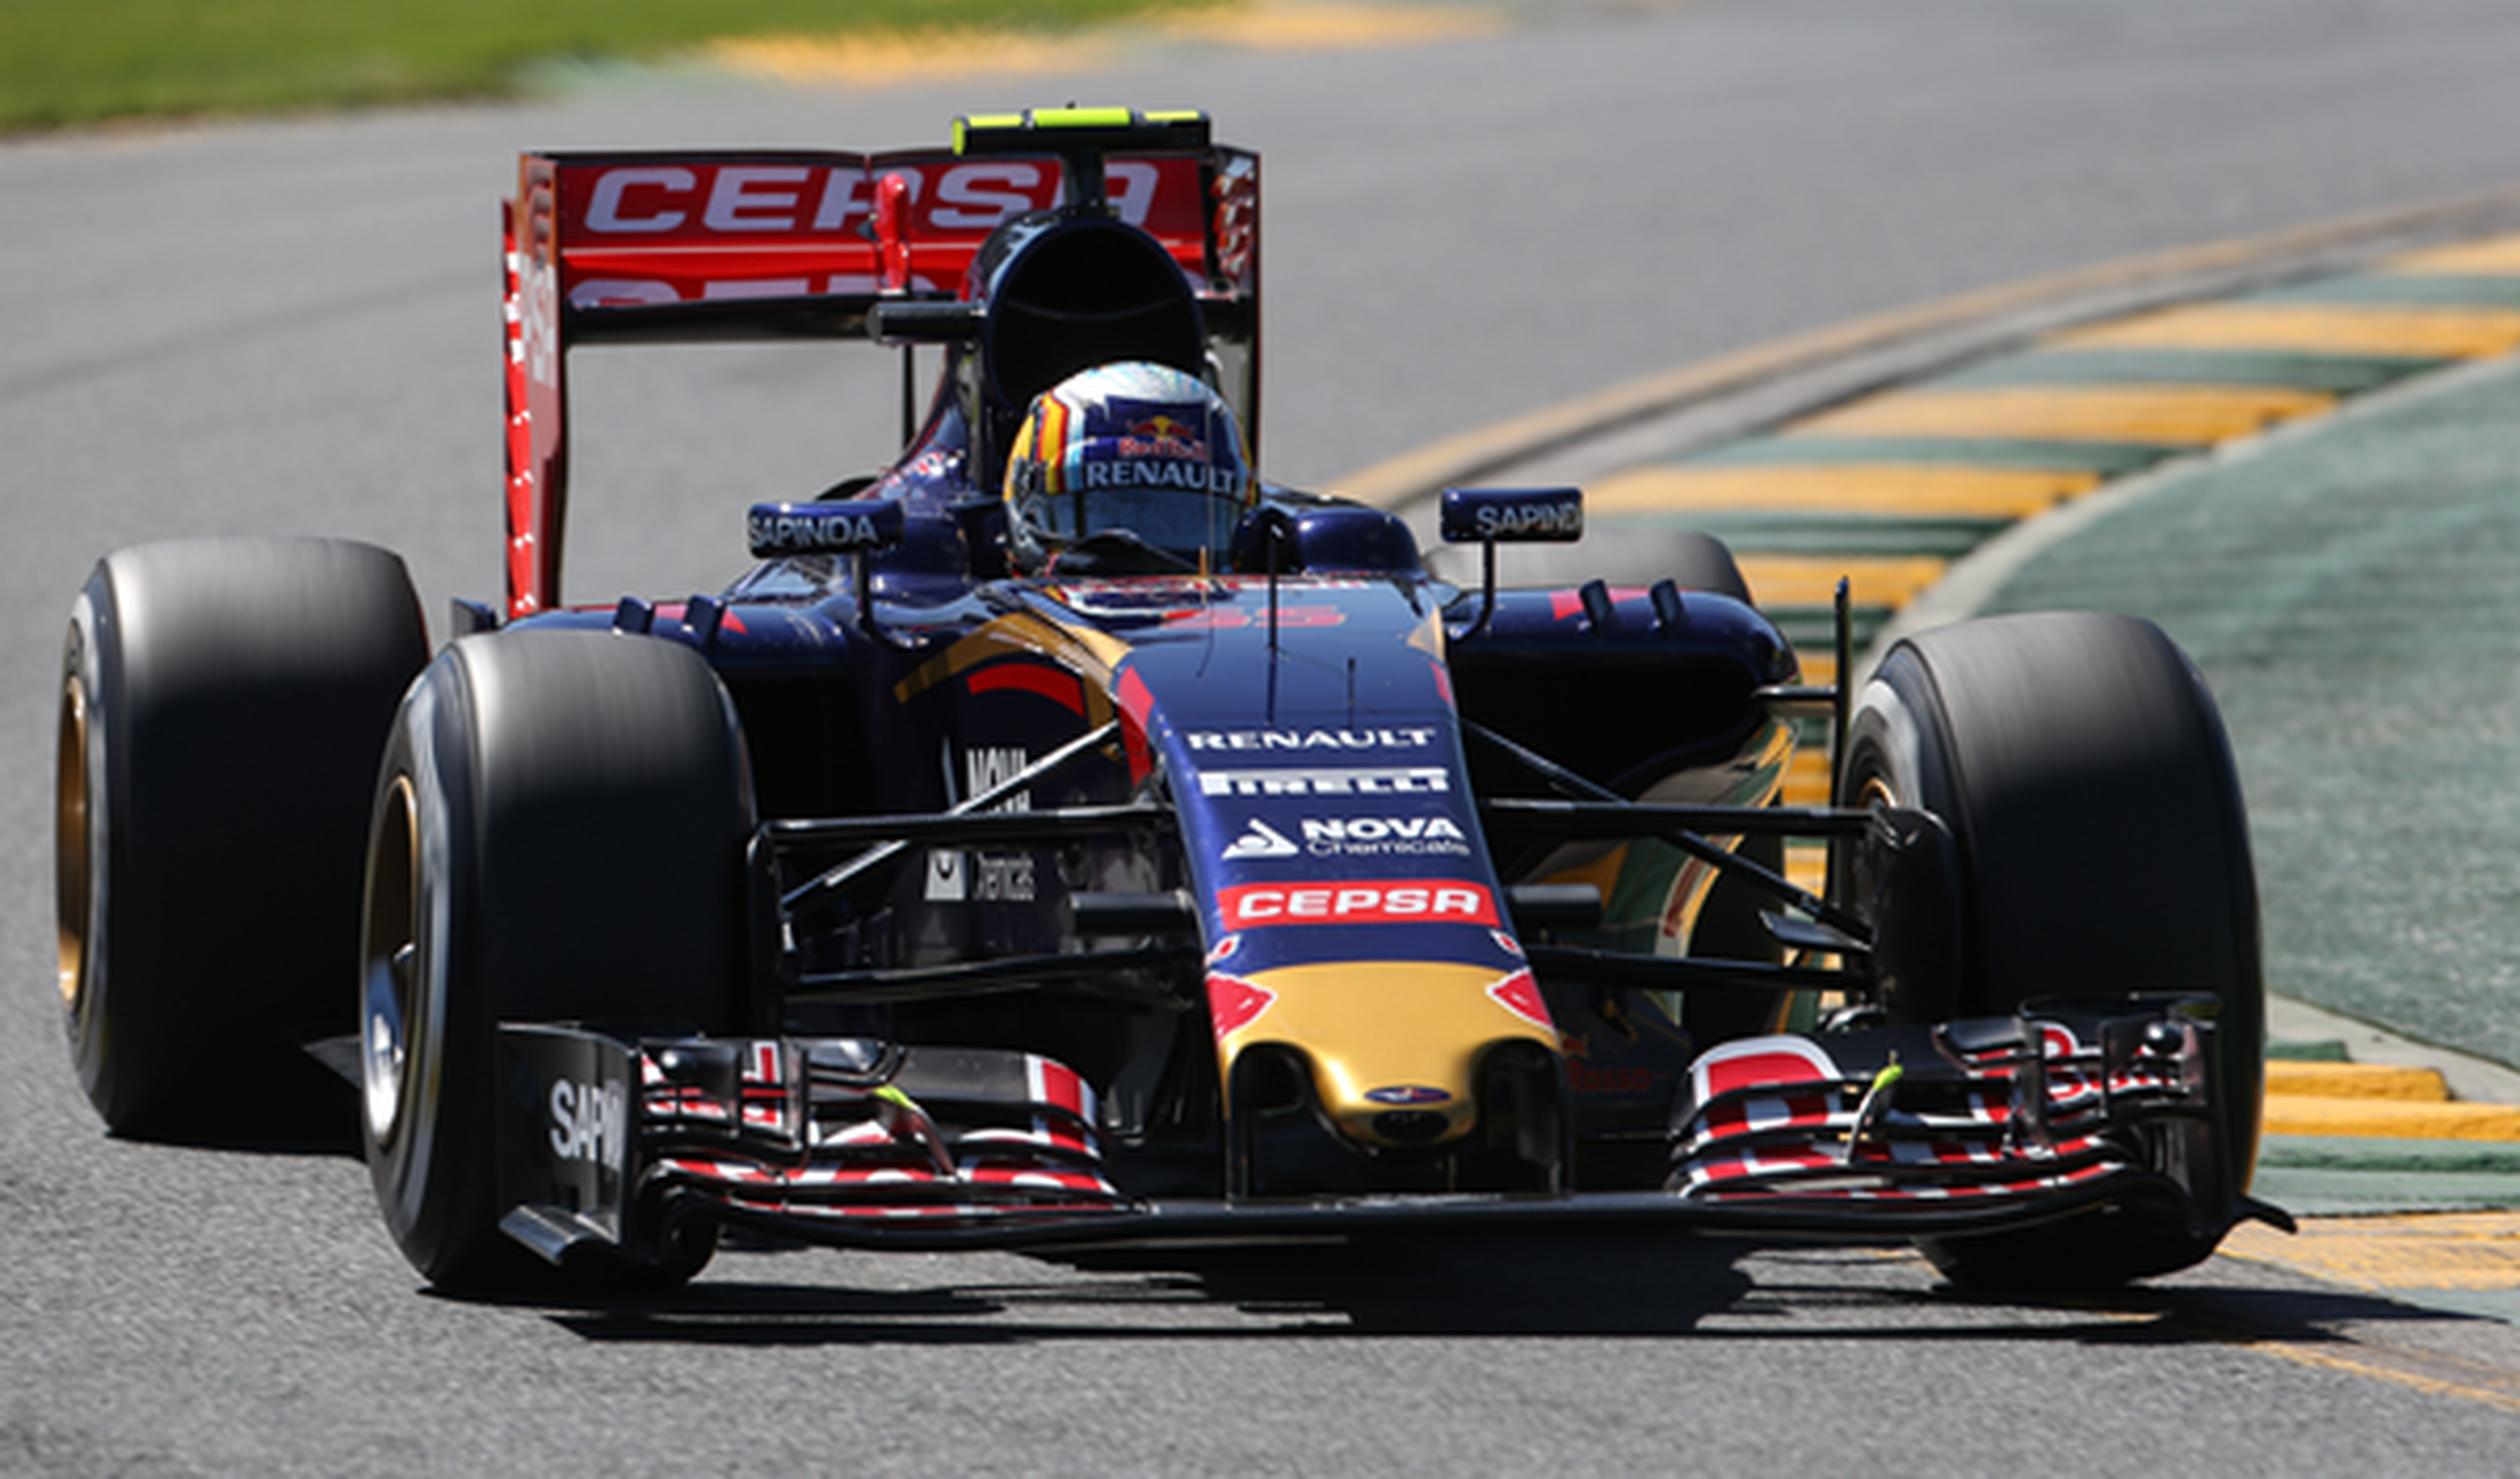 Positivo debut de Sainz en Australia. Merhi, a la espera